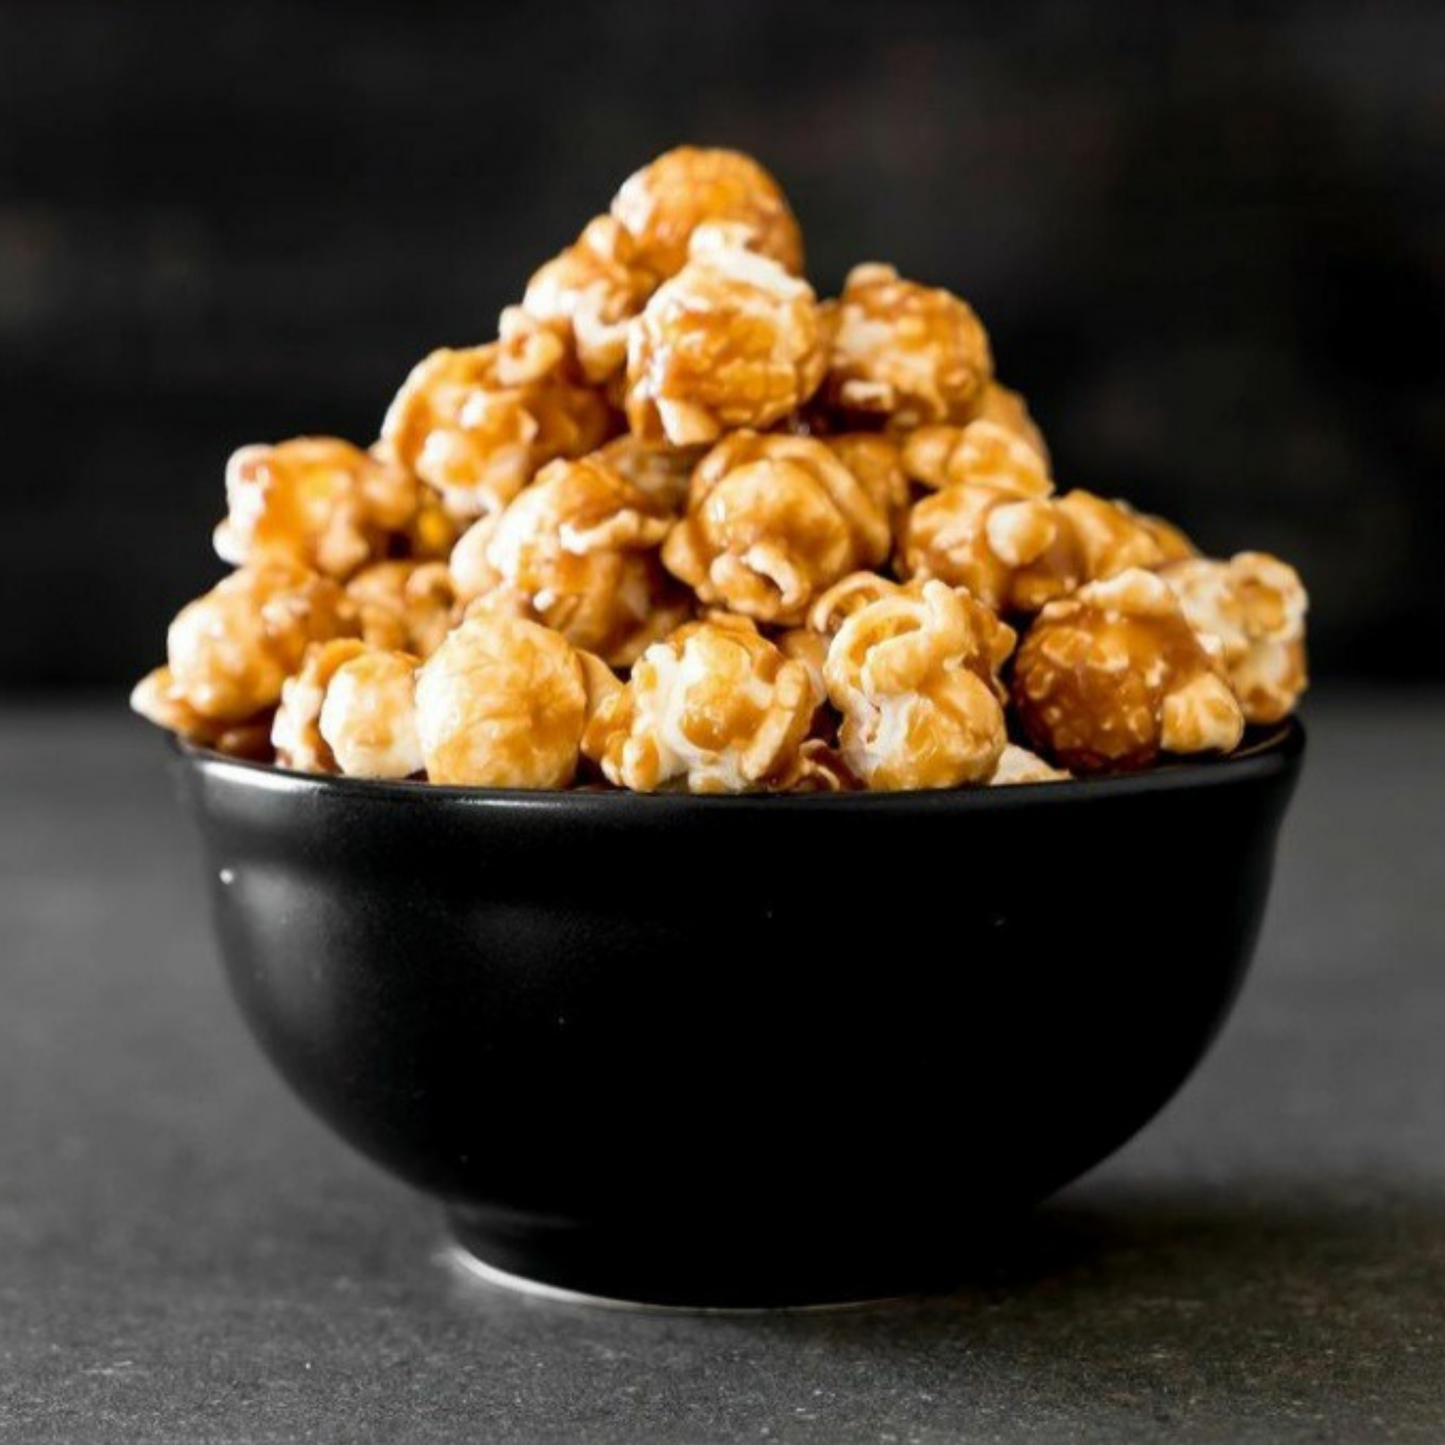 EATABLE Popcorn - Whisky on the Pops (125g) 🍿🥃 Caramel Popcorn: US Package